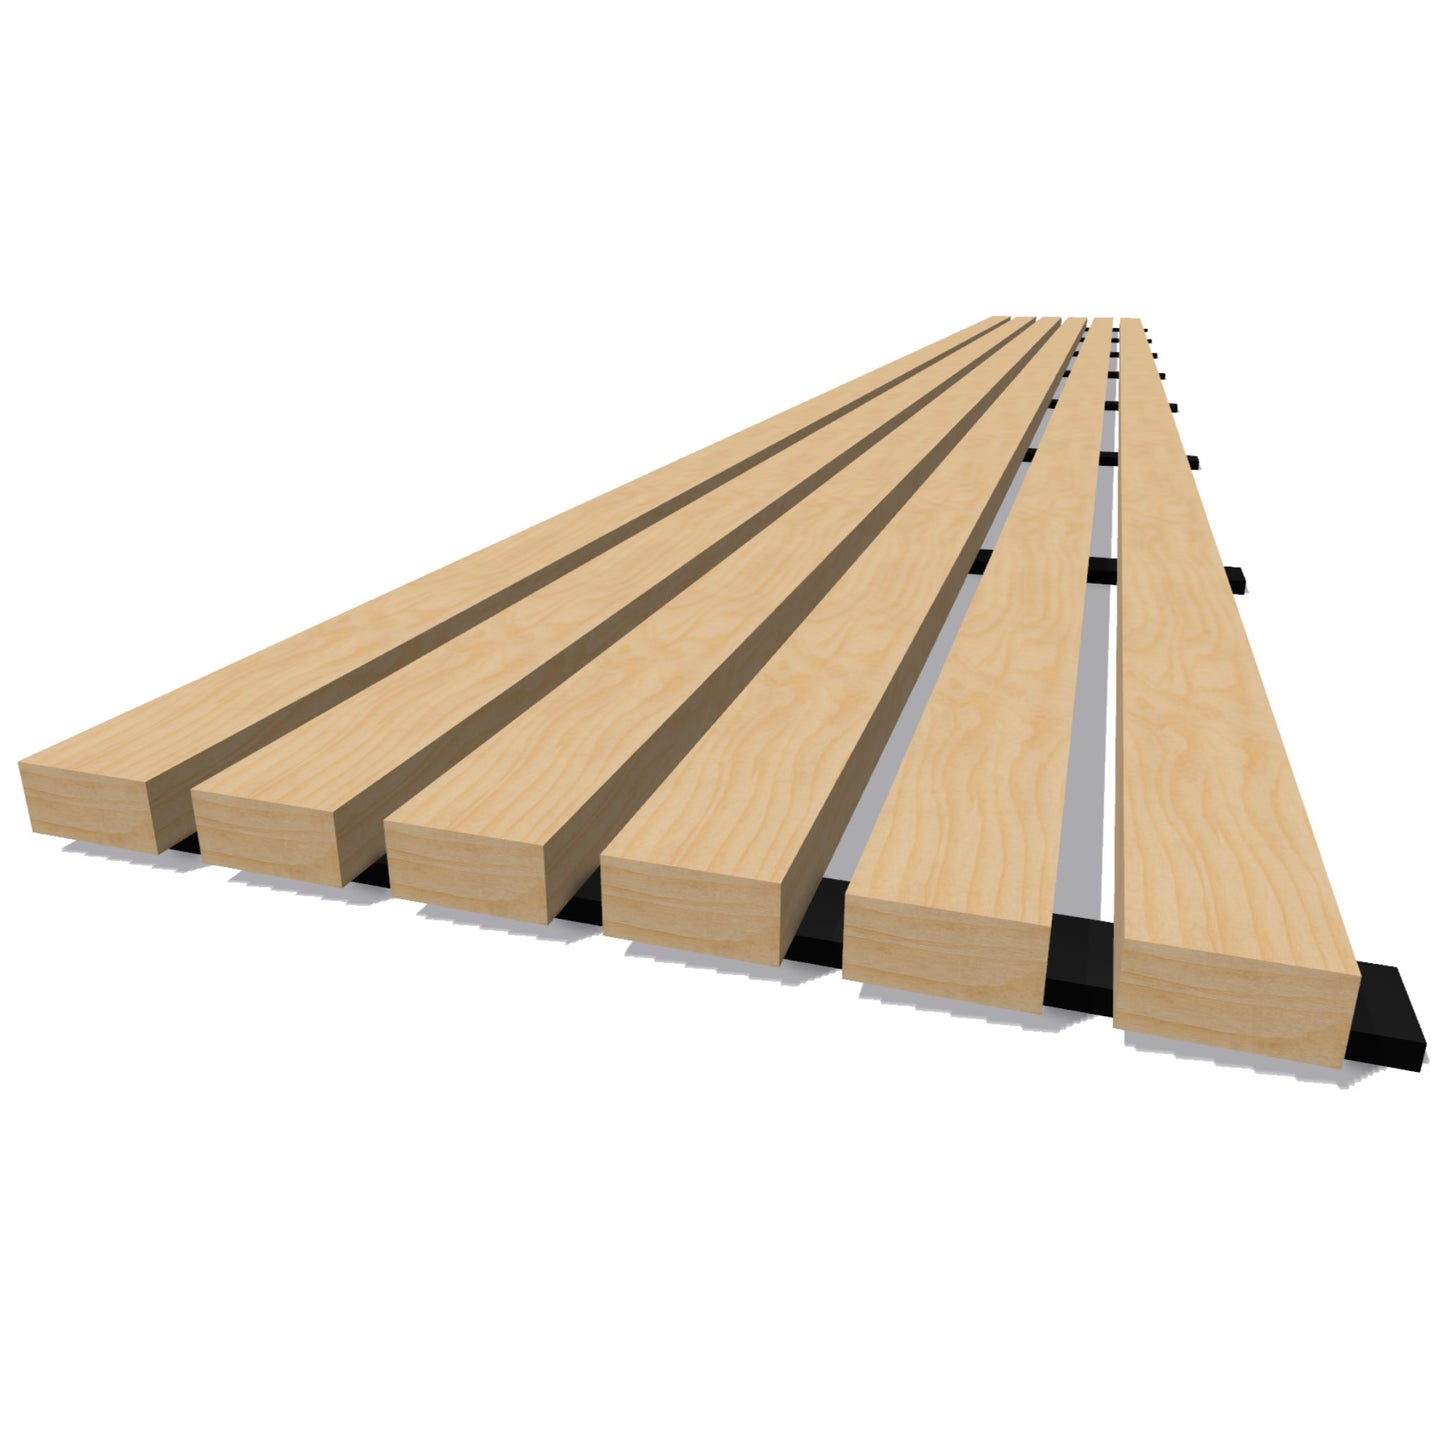 Architectural wood panels Element